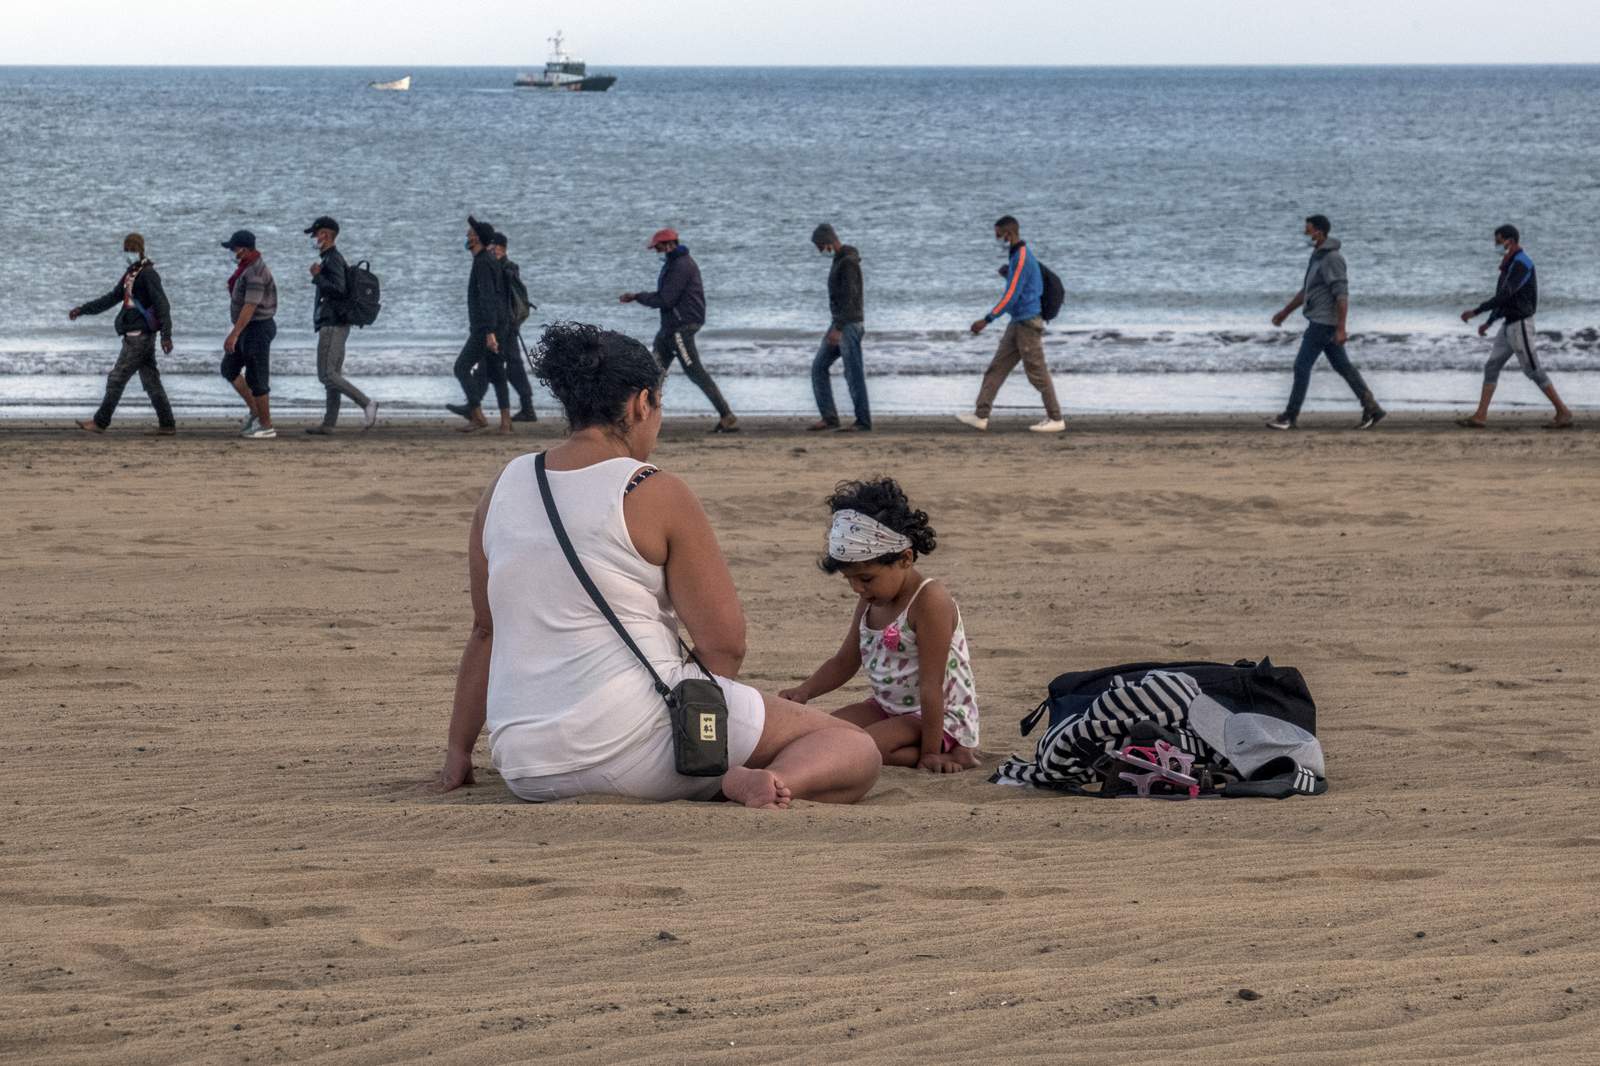 Spanish islands struggle with migration surge amid pandemic